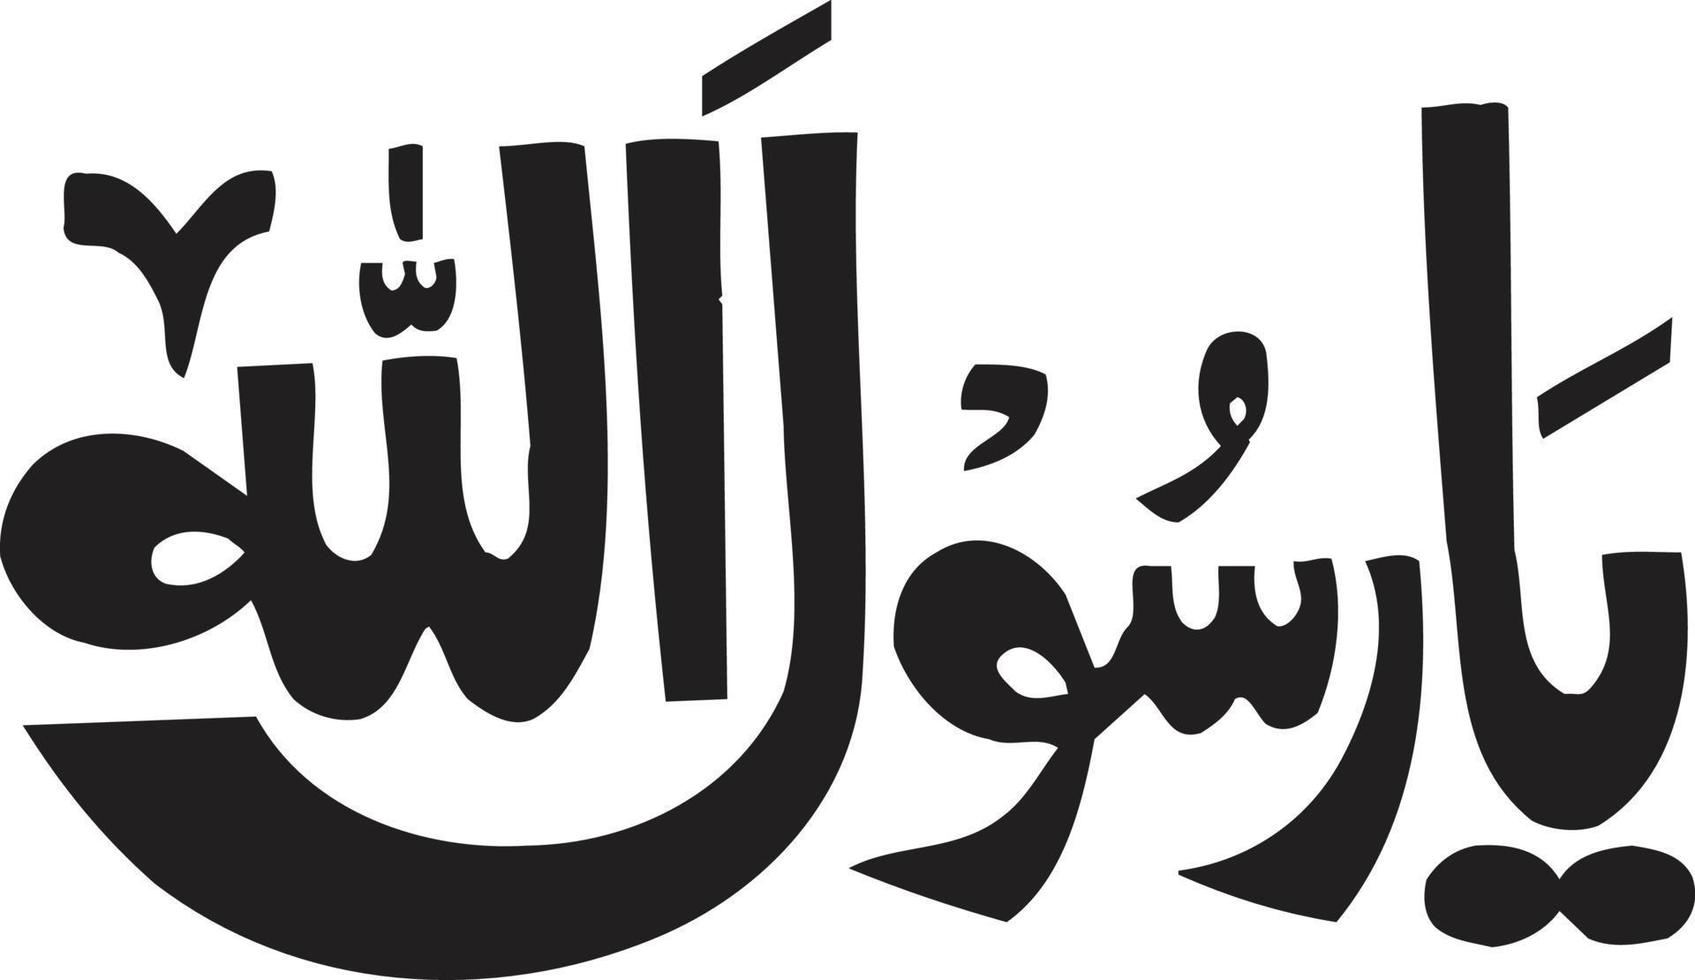 ya rasoolalha vetor livre de caligrafia árabe islâmica